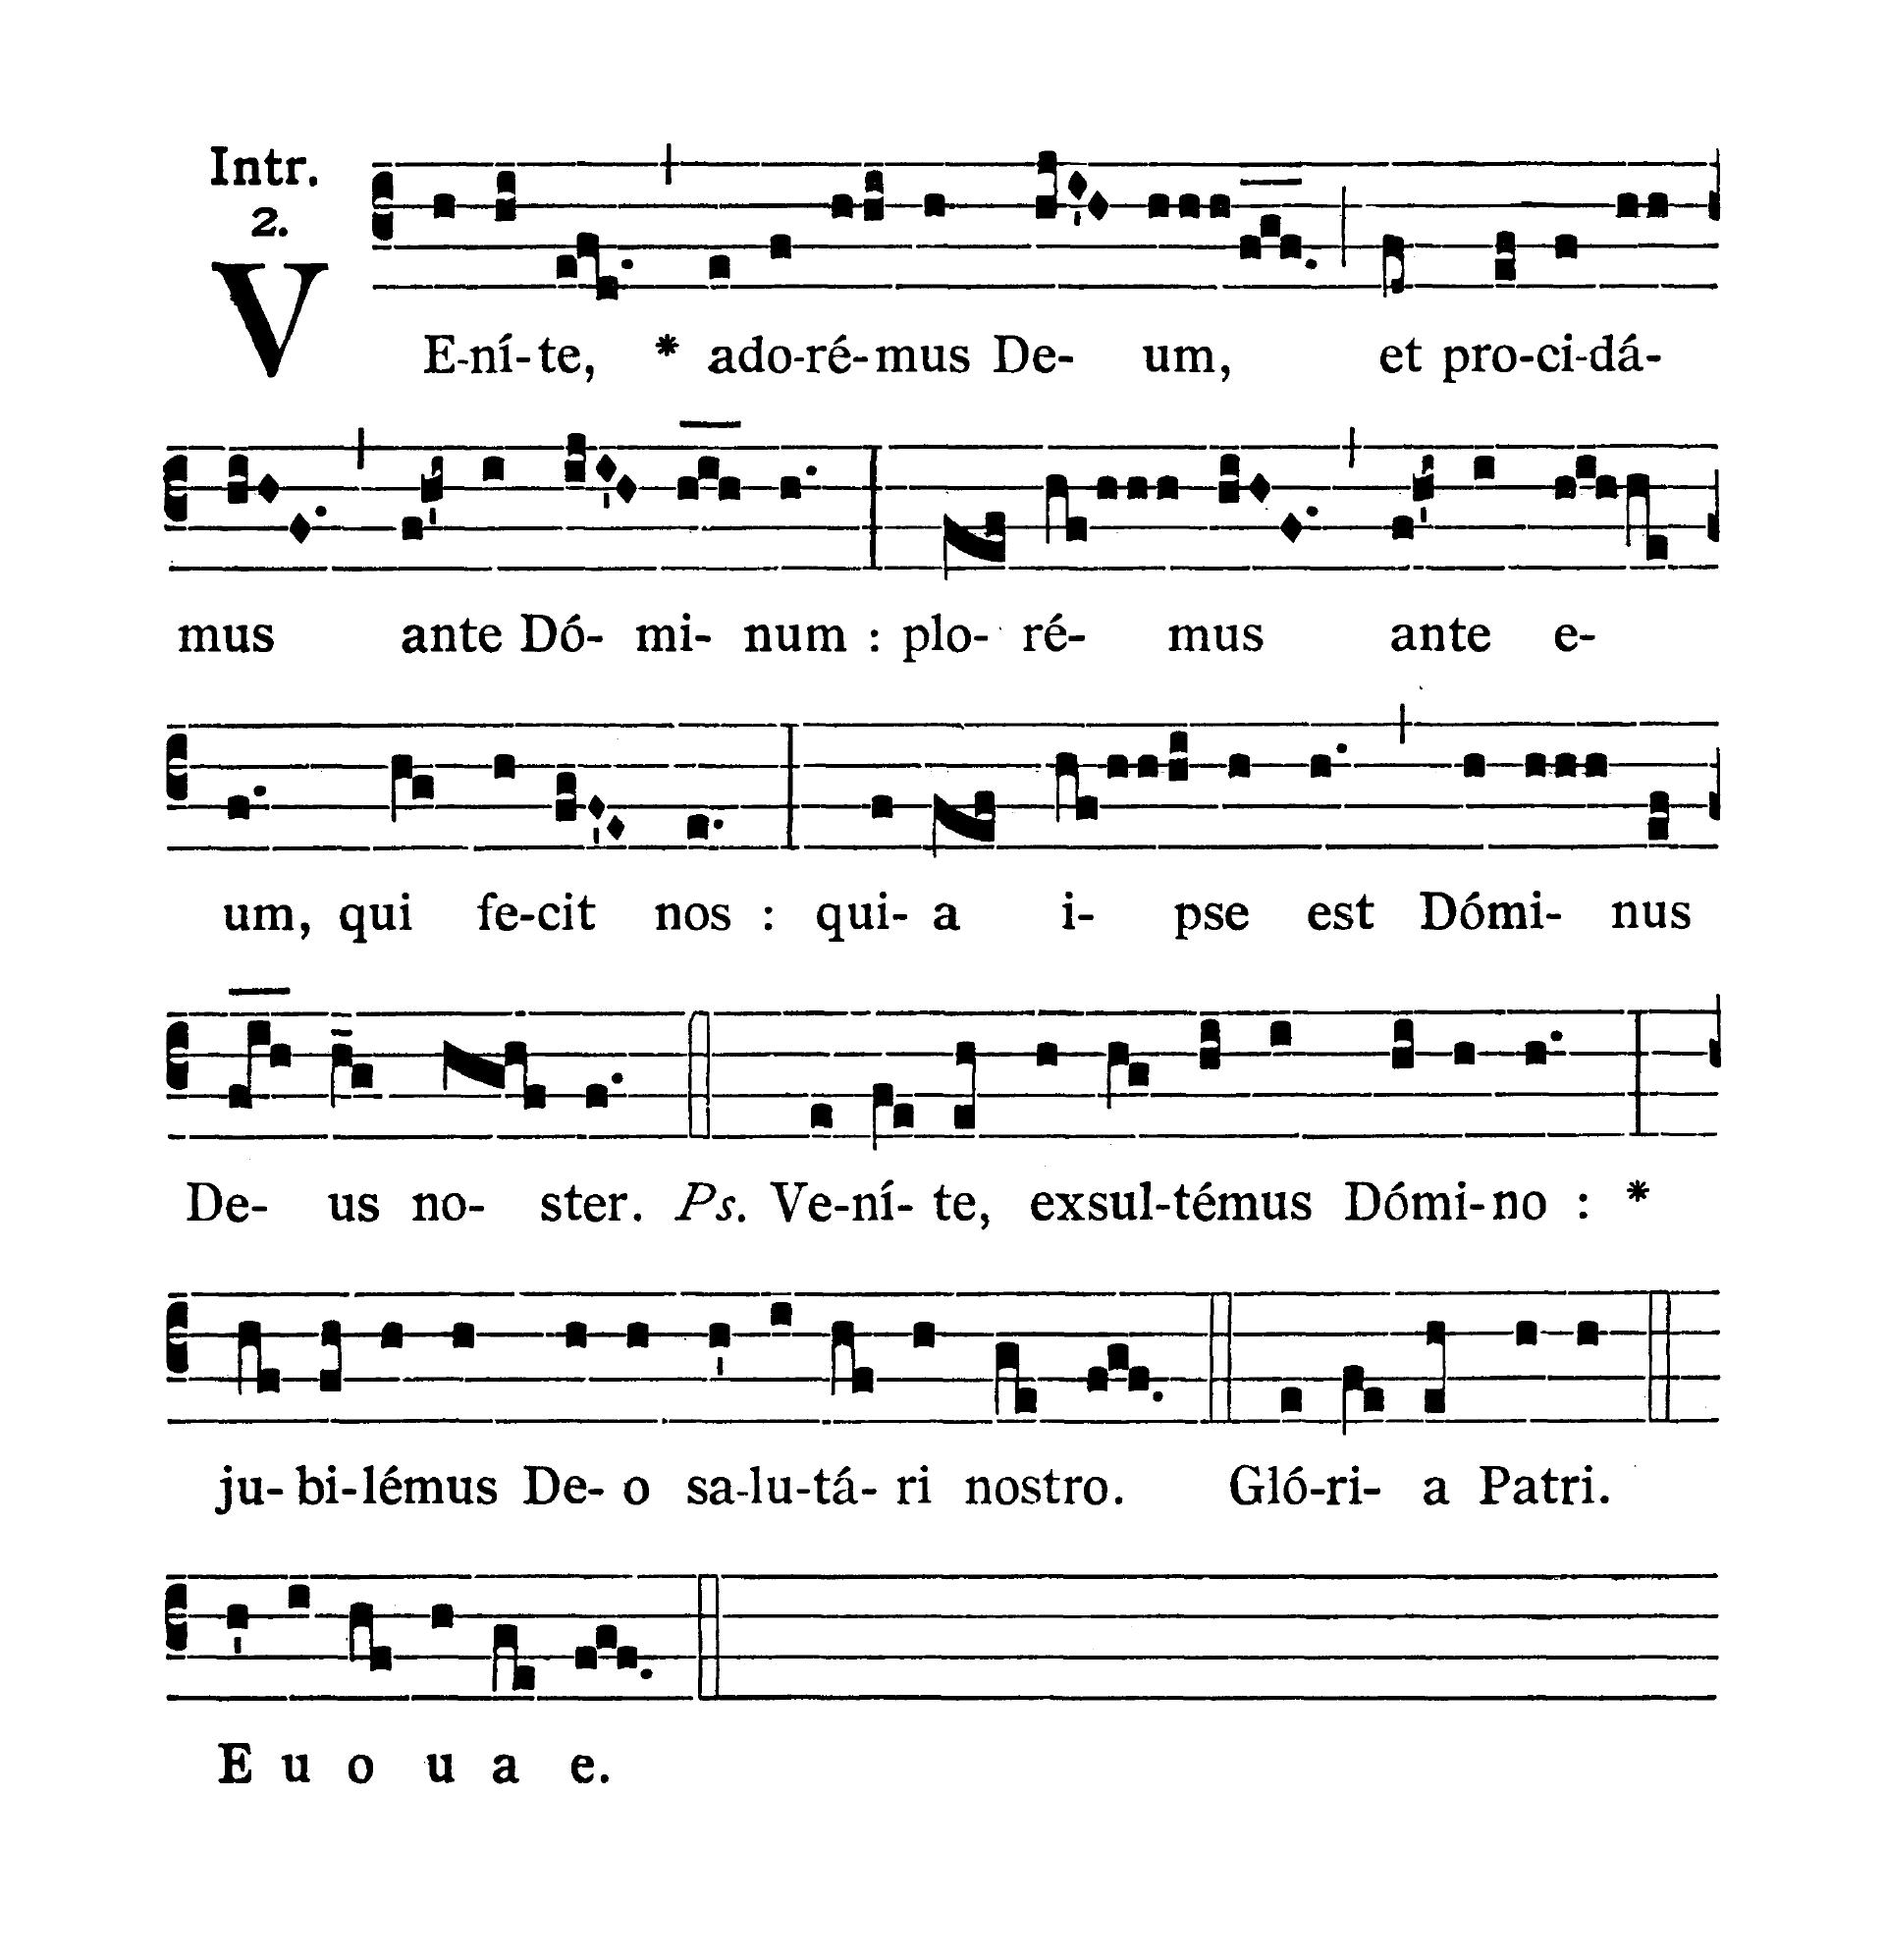 Sabbato Quatuor Temporum Septembris (Sobota suchych dni wrześniowych) - Introitus (Venite)